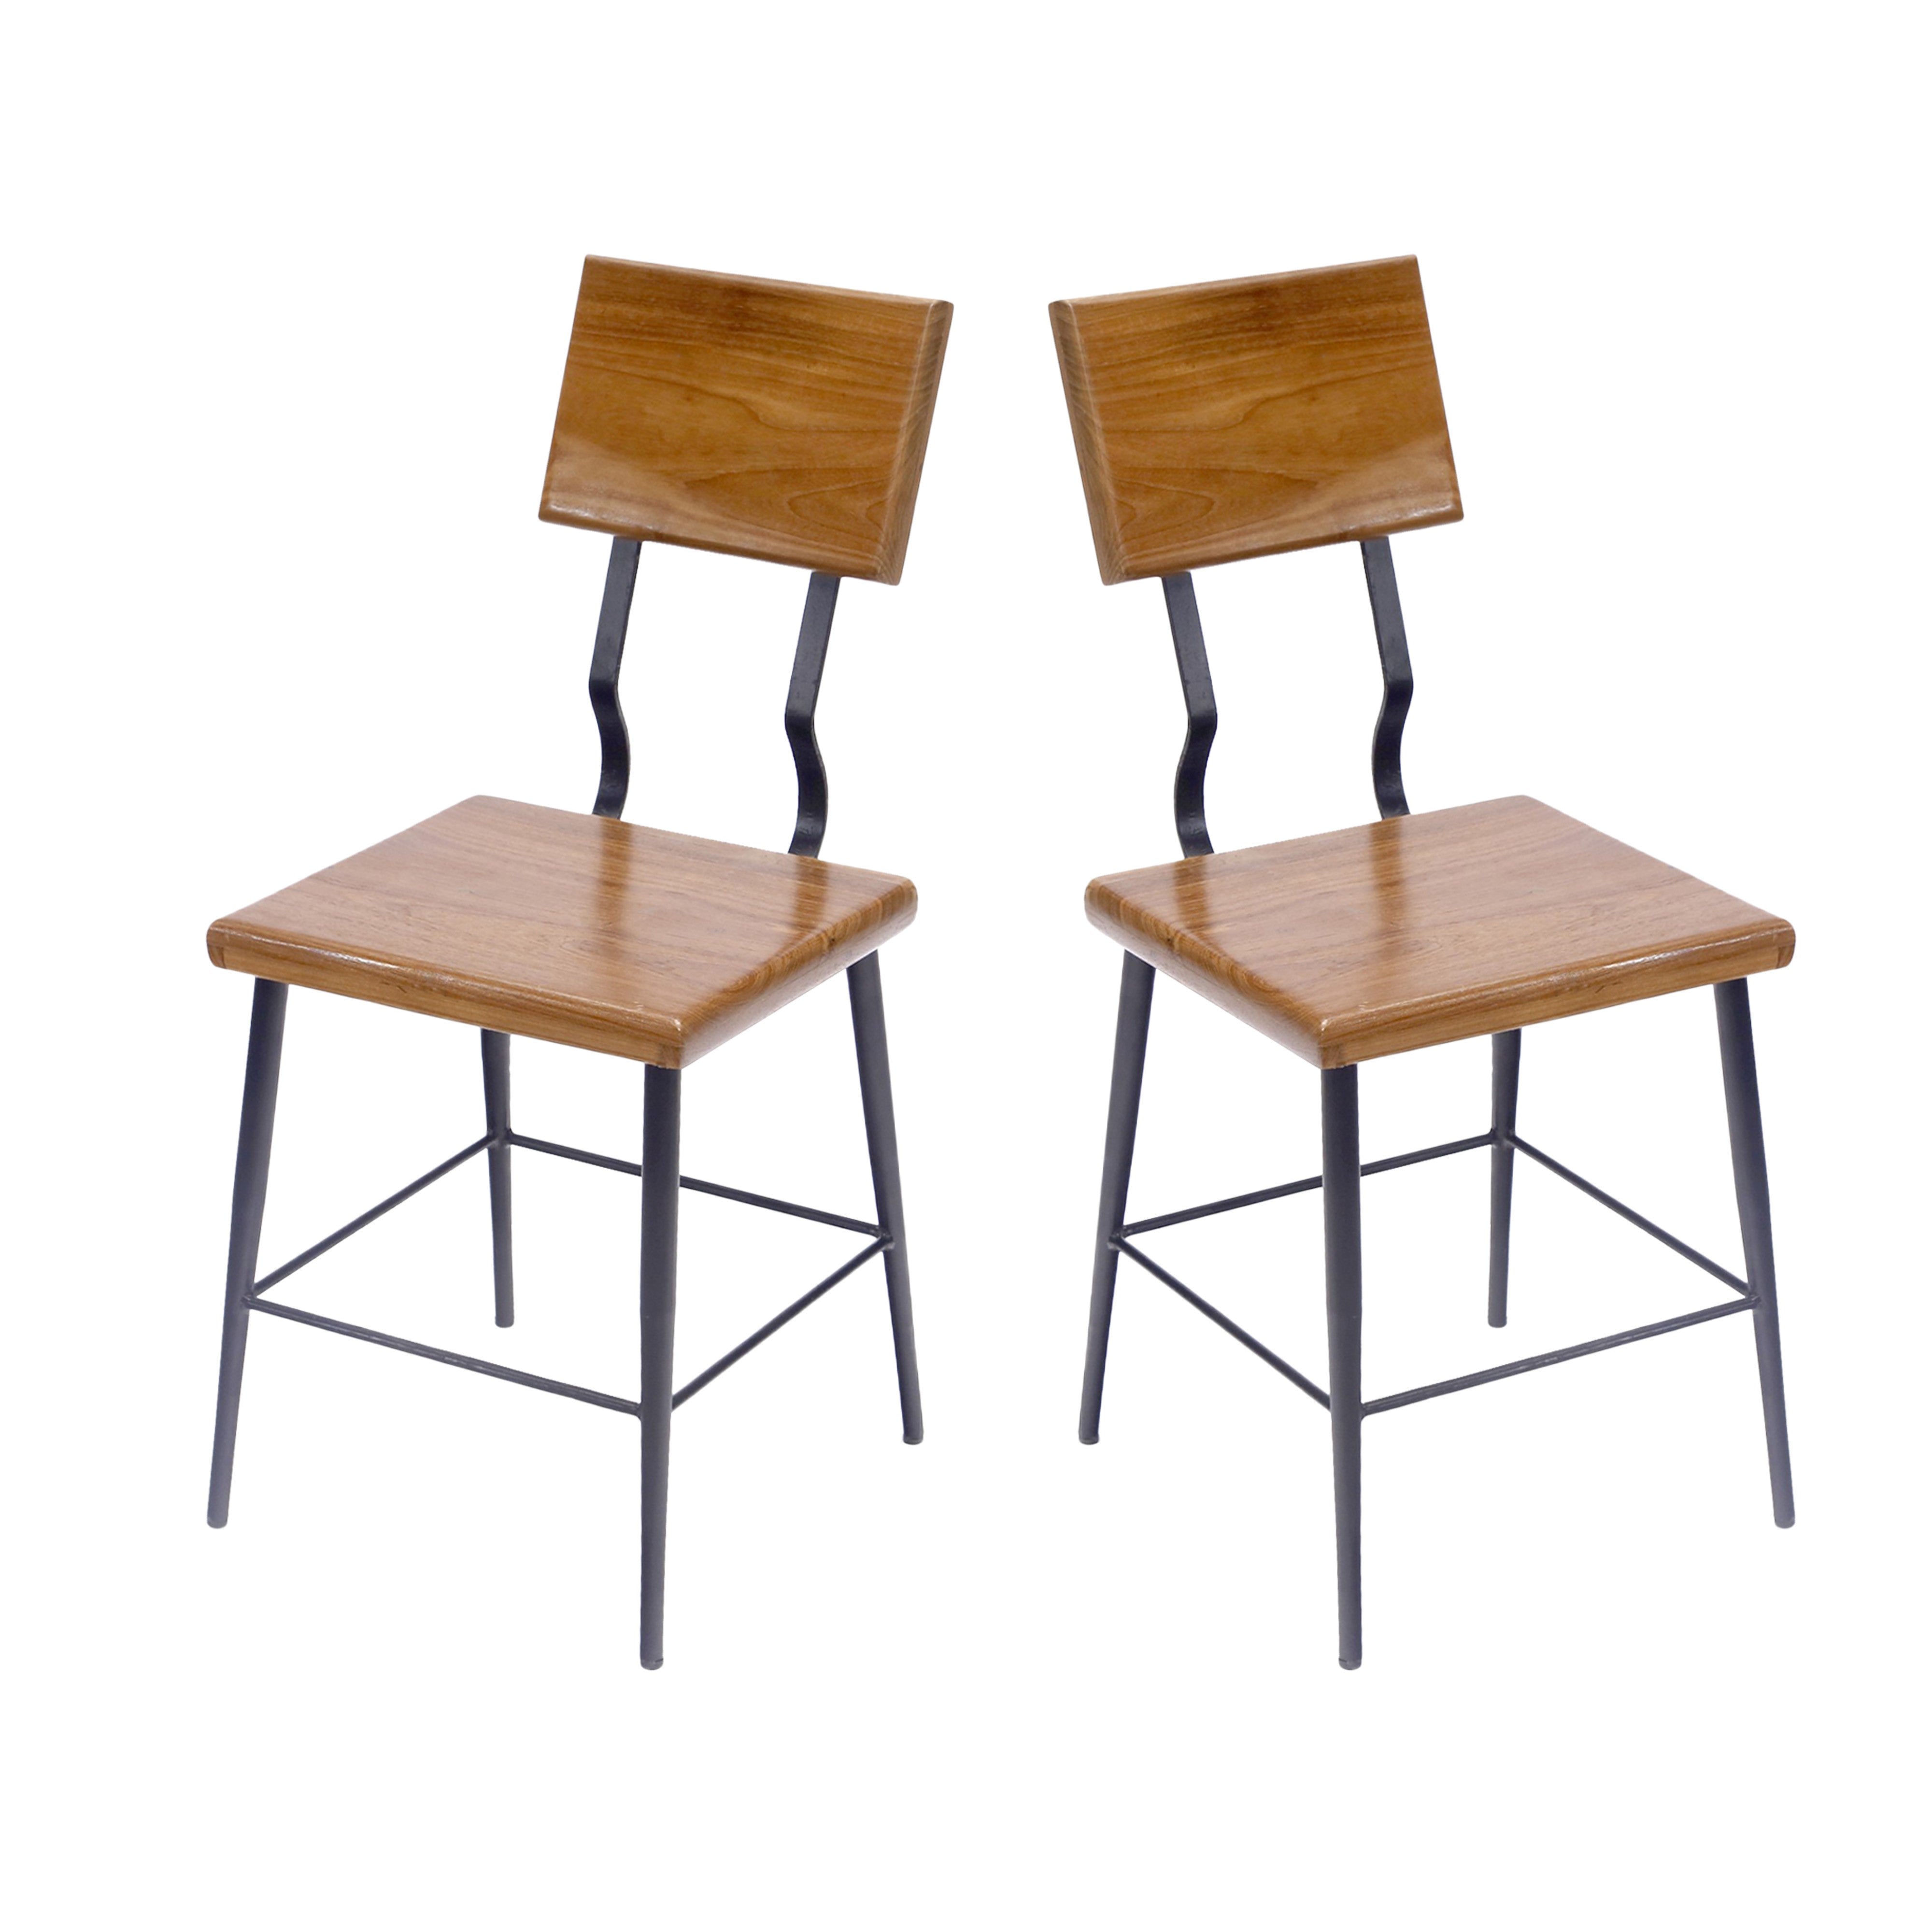 (Set of 2) Teak Wood Metallic Chair Dining Chair